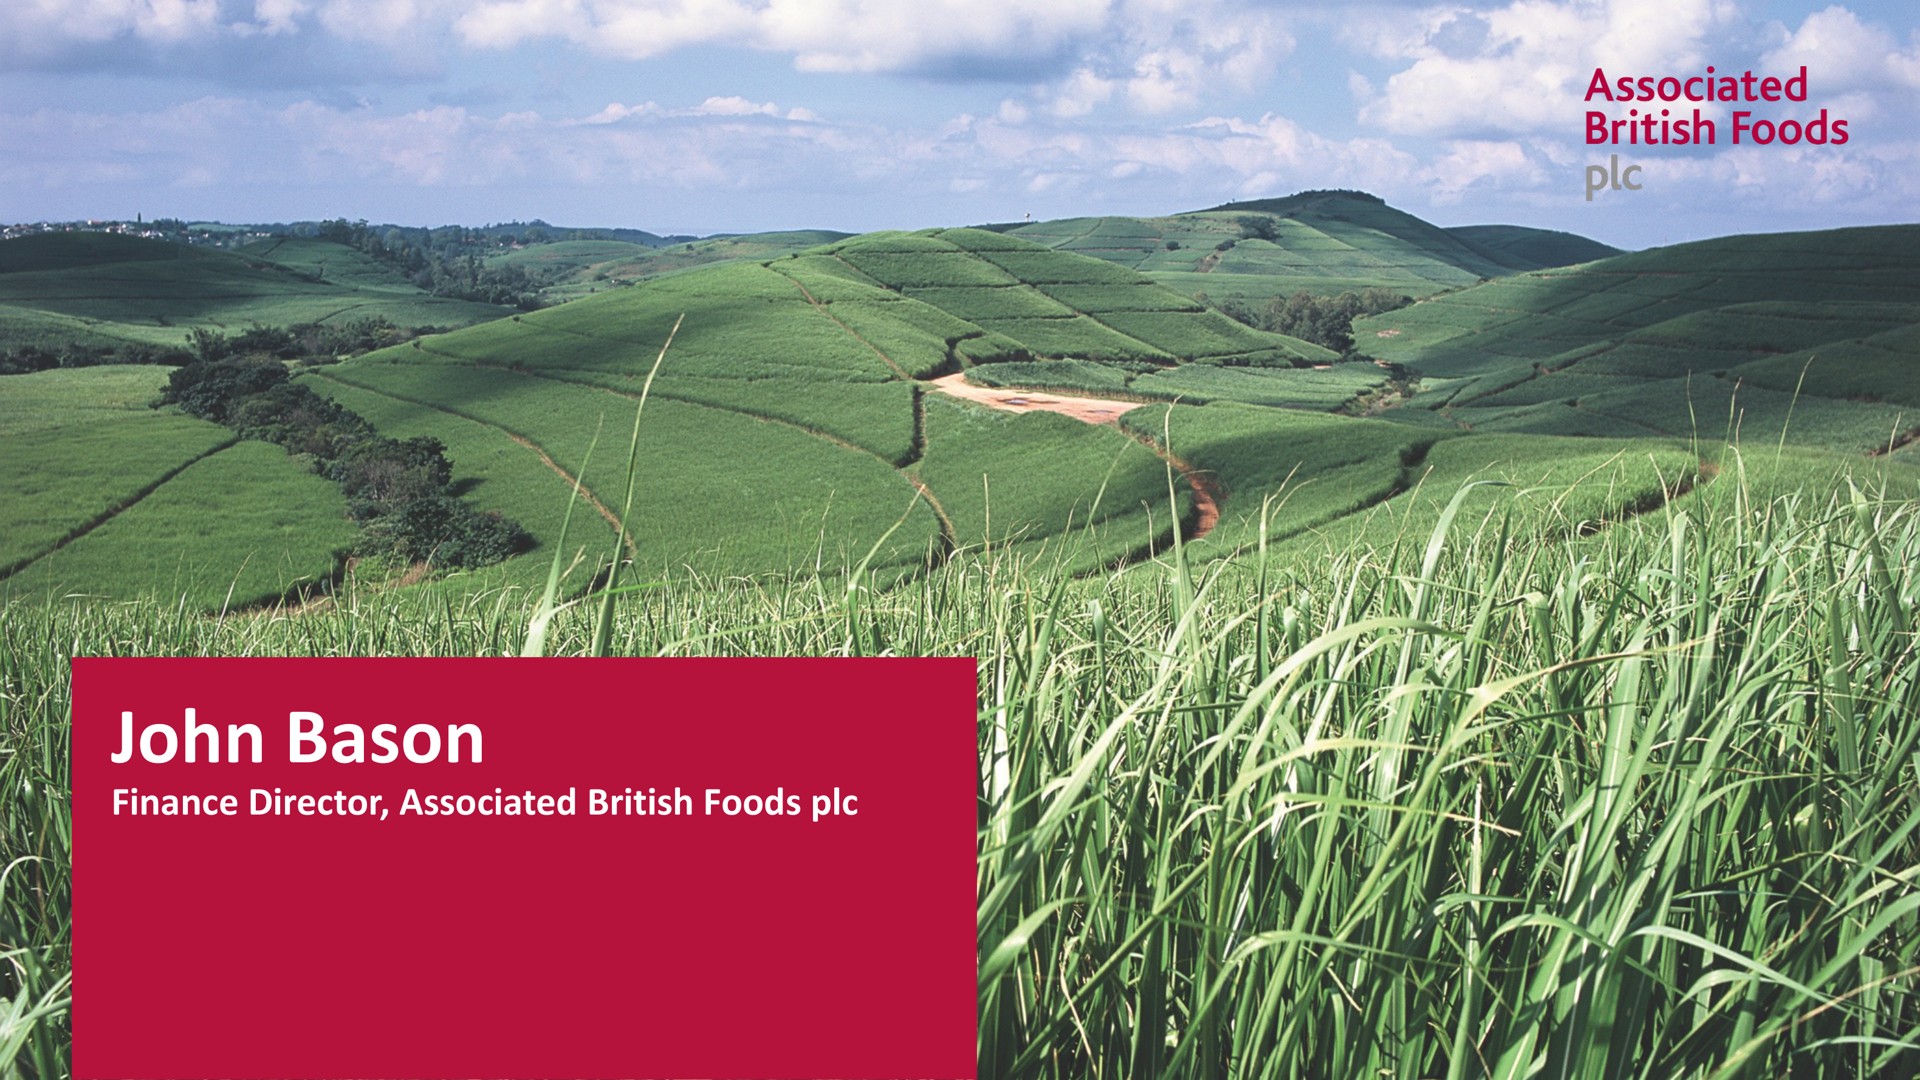 bason finance director associated foods | Associated British Foods